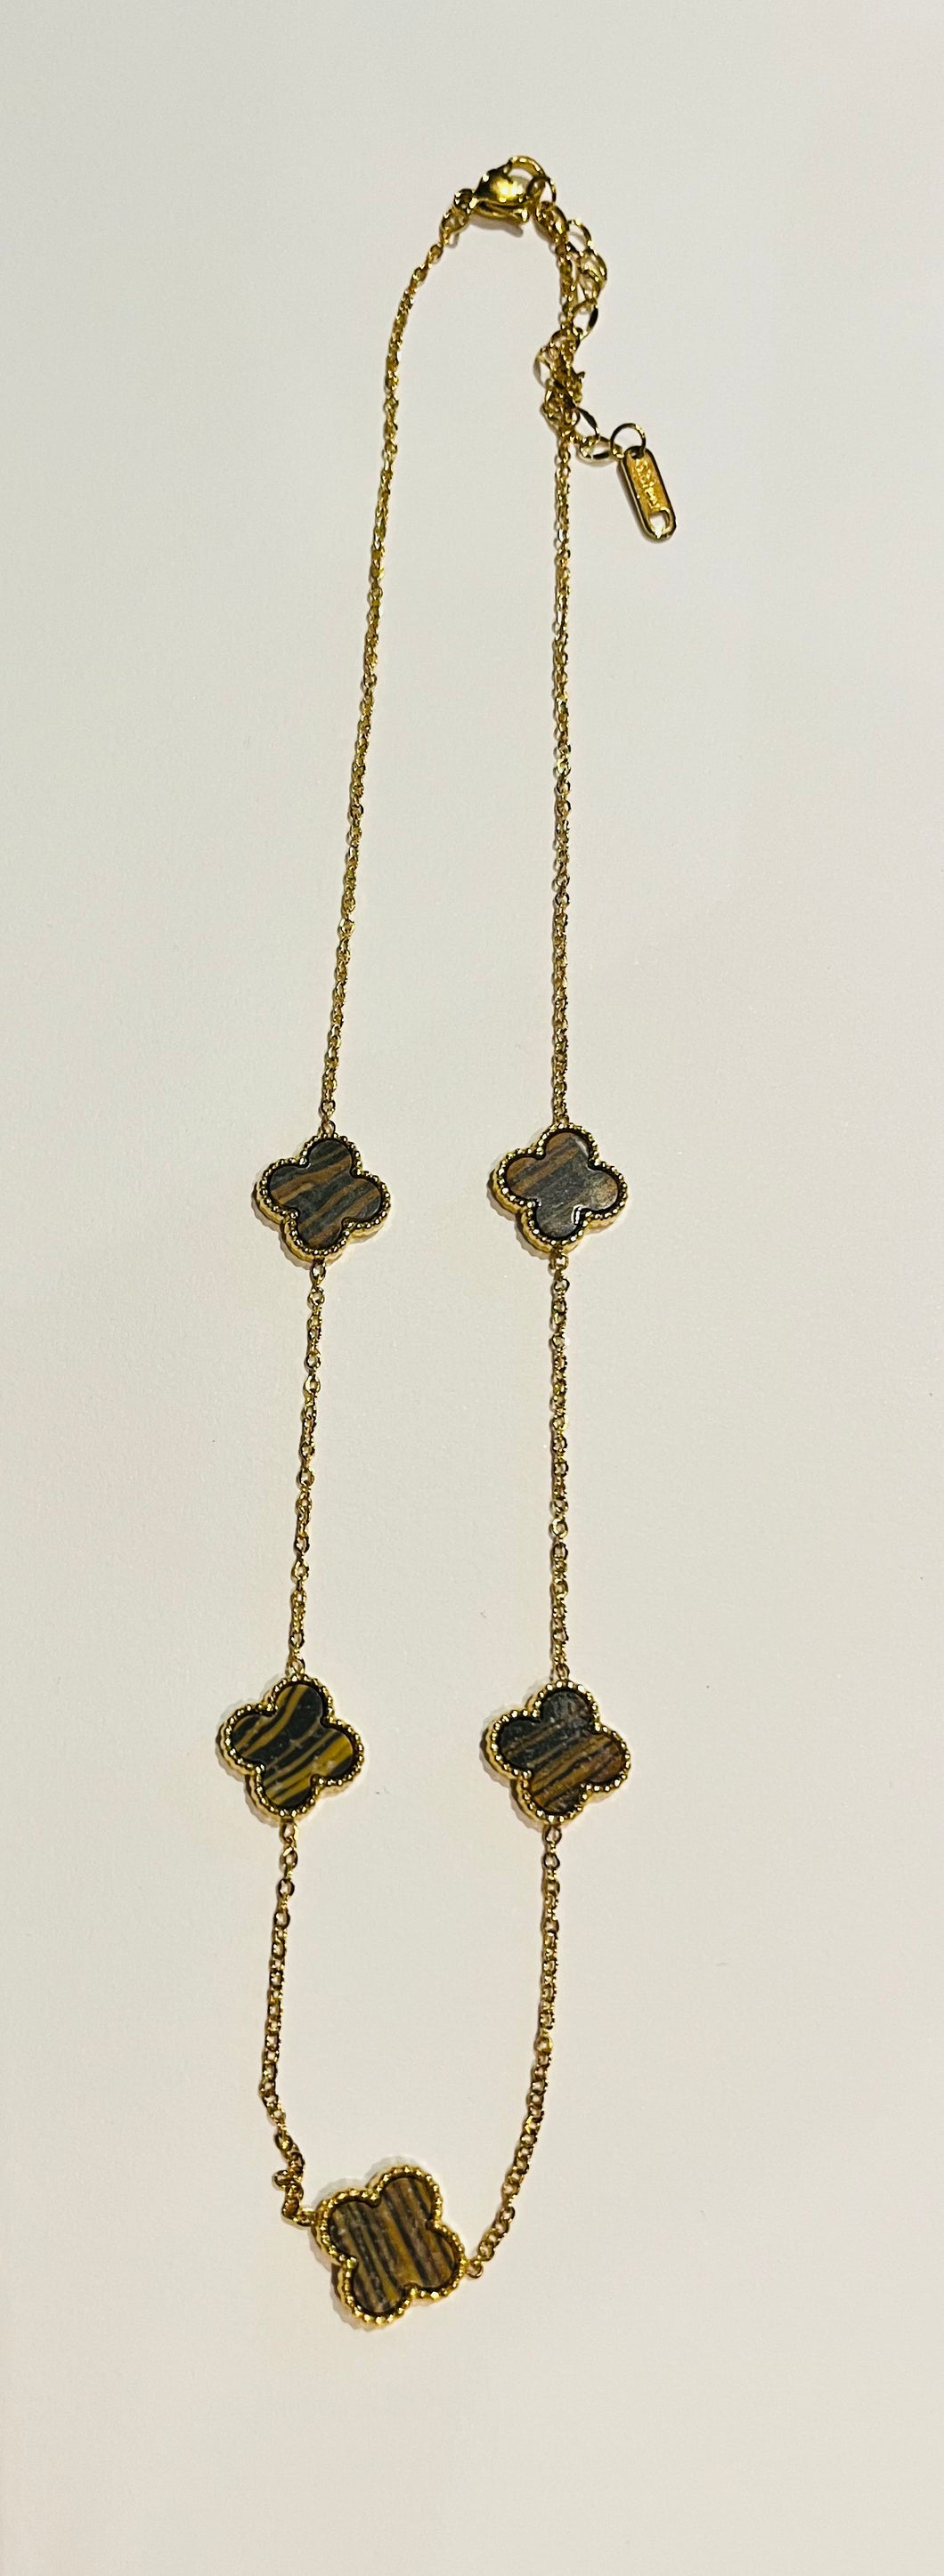 Clover Cleef Short Necklace (gold colour with faux tortoise shell) - chichappensboutique